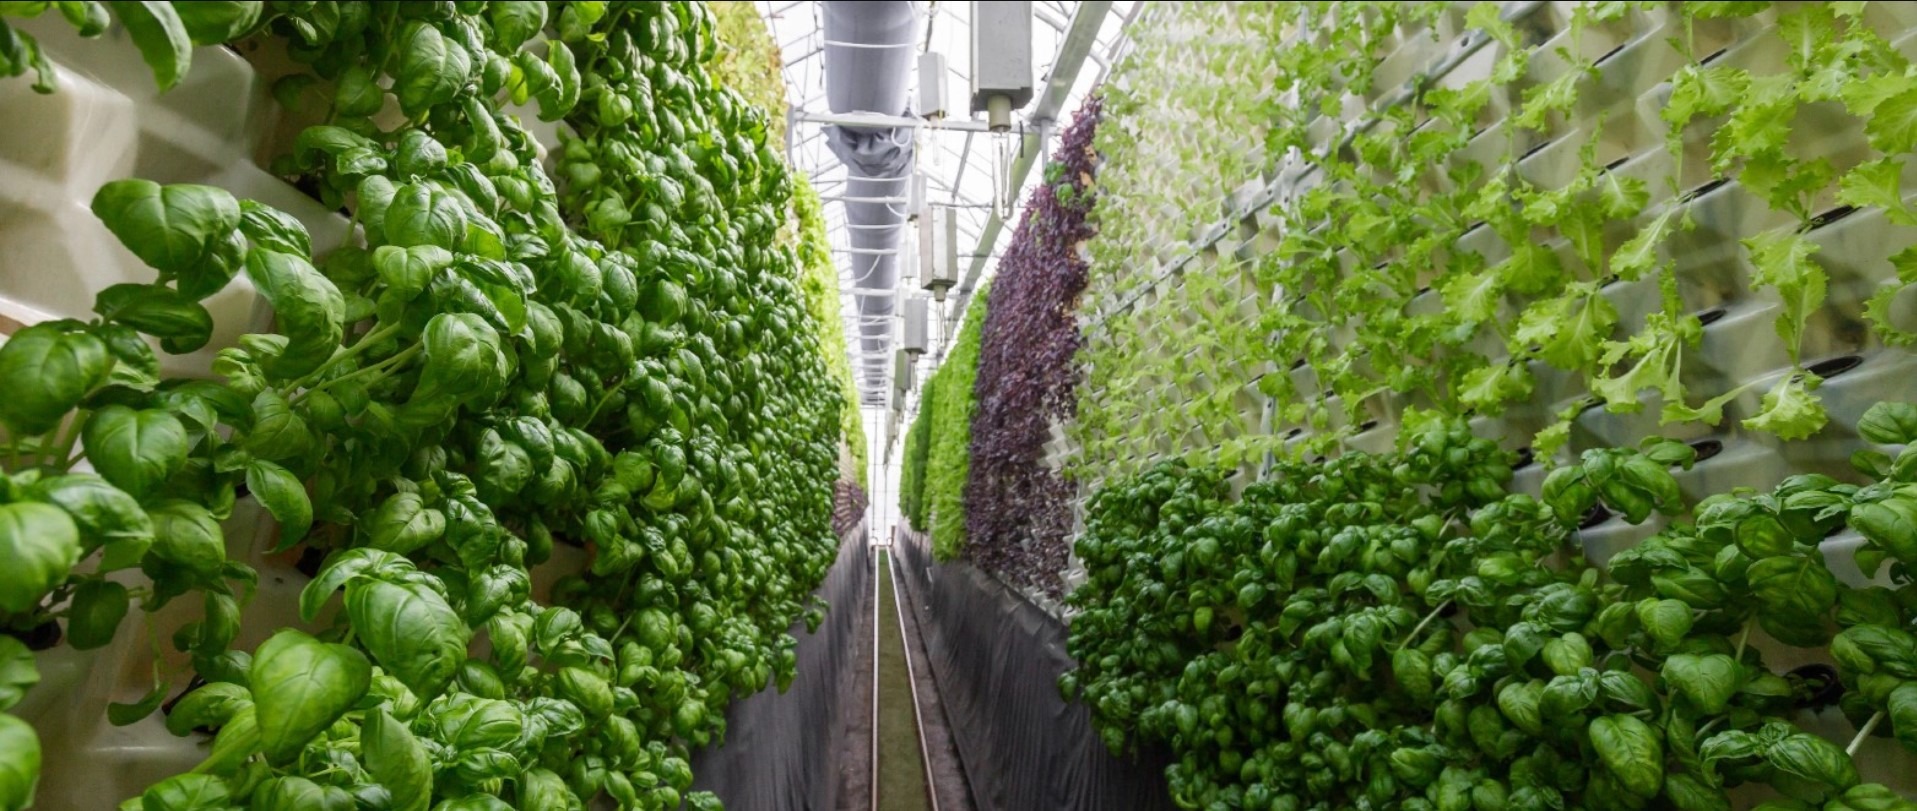 vertical farming ap lang essay